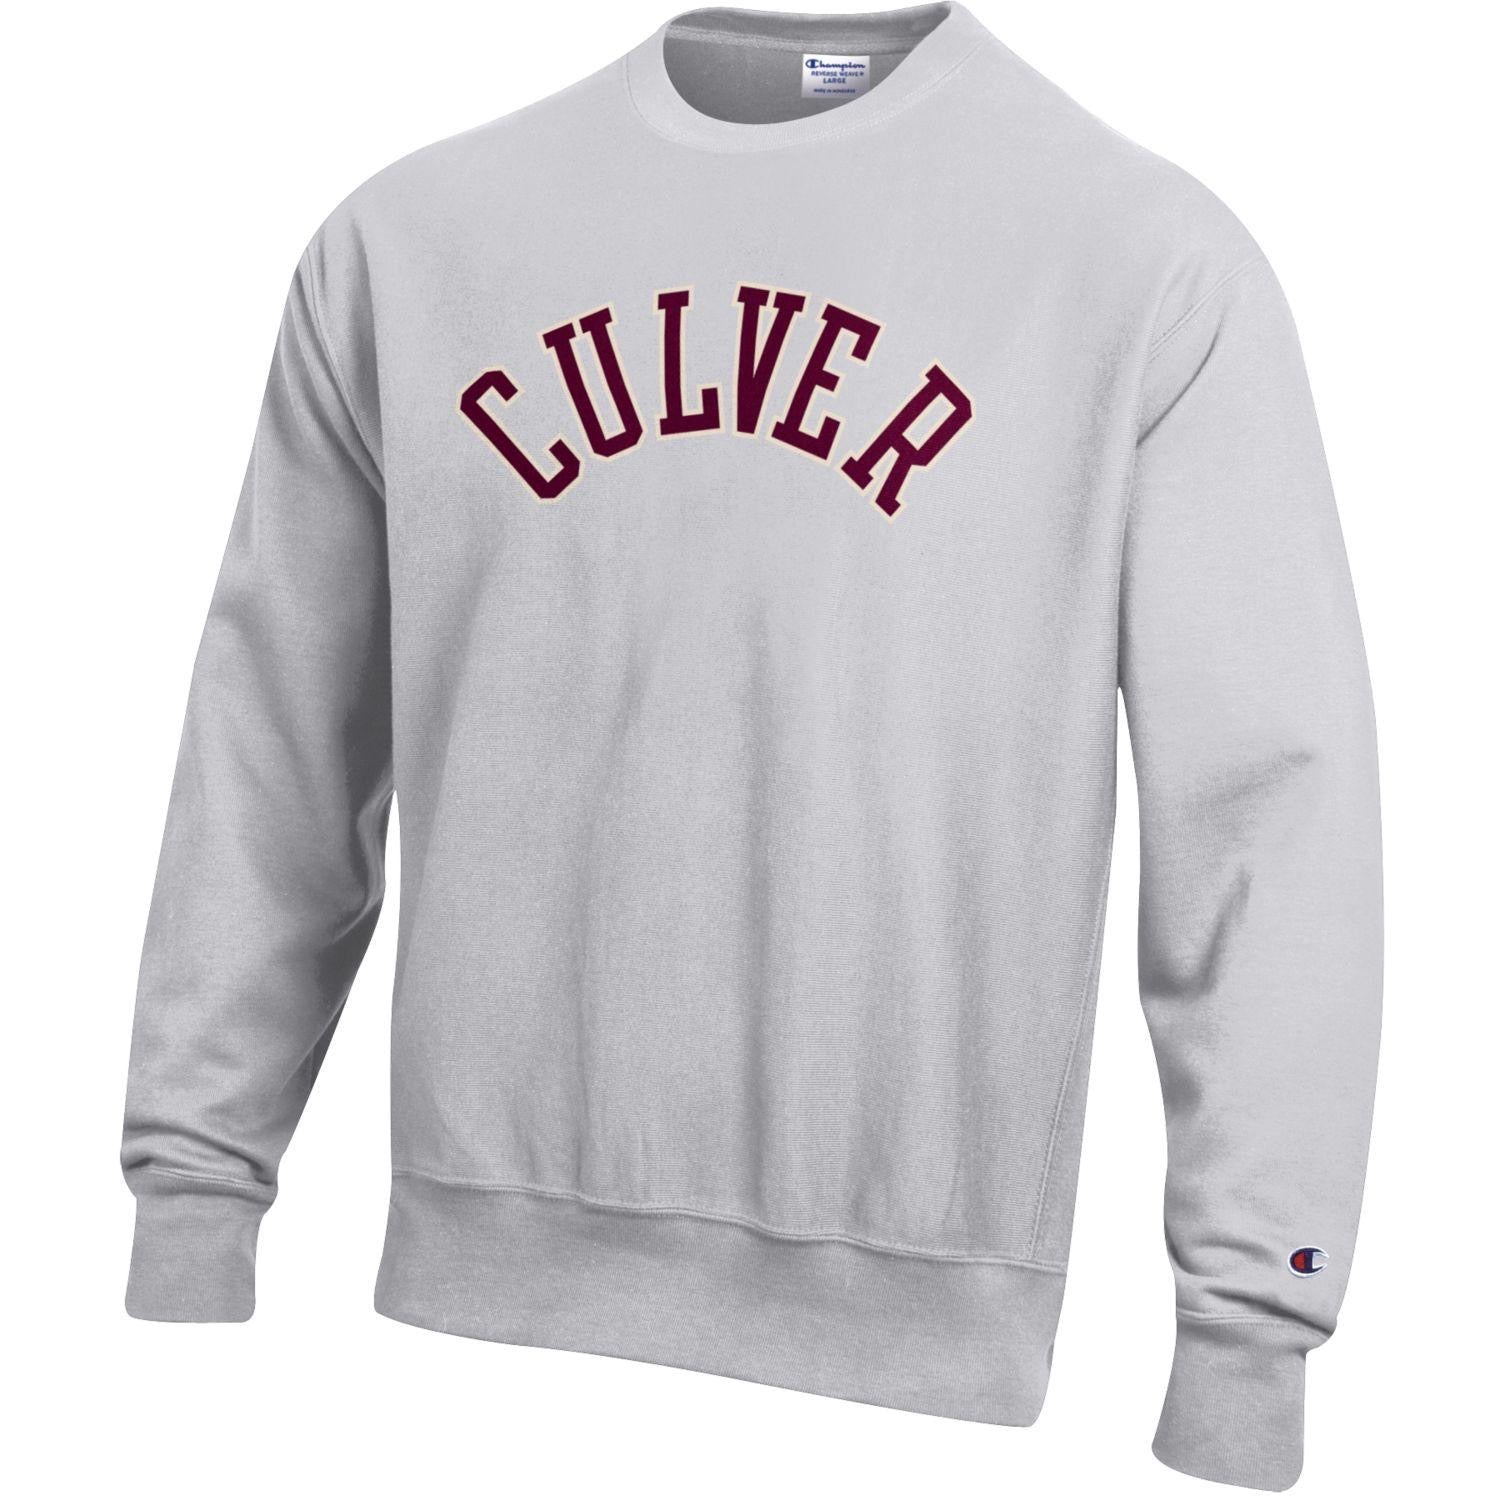 Champion Culver Wool Felt Reverse Weave Crew - Silver Grey